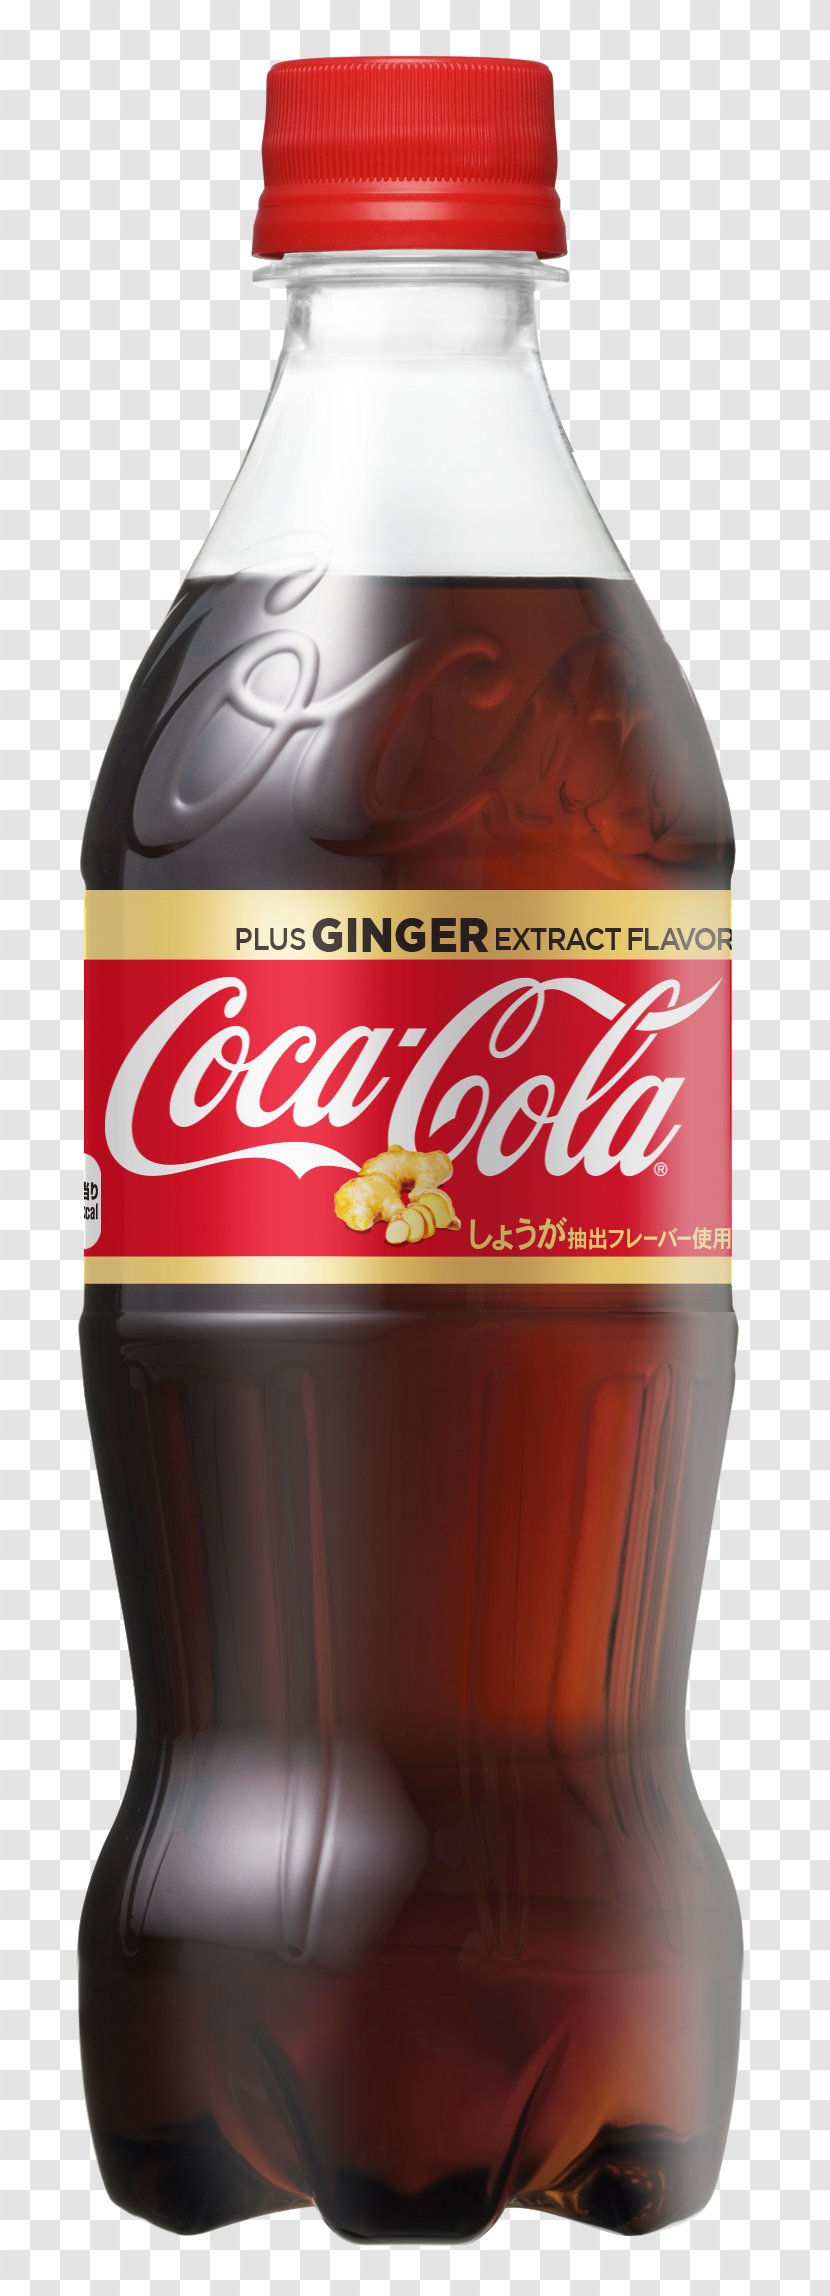 Coca-Cola Cherry Fizzy Drinks Glass Bottle - Aphrodisiac - News Center Transparent PNG